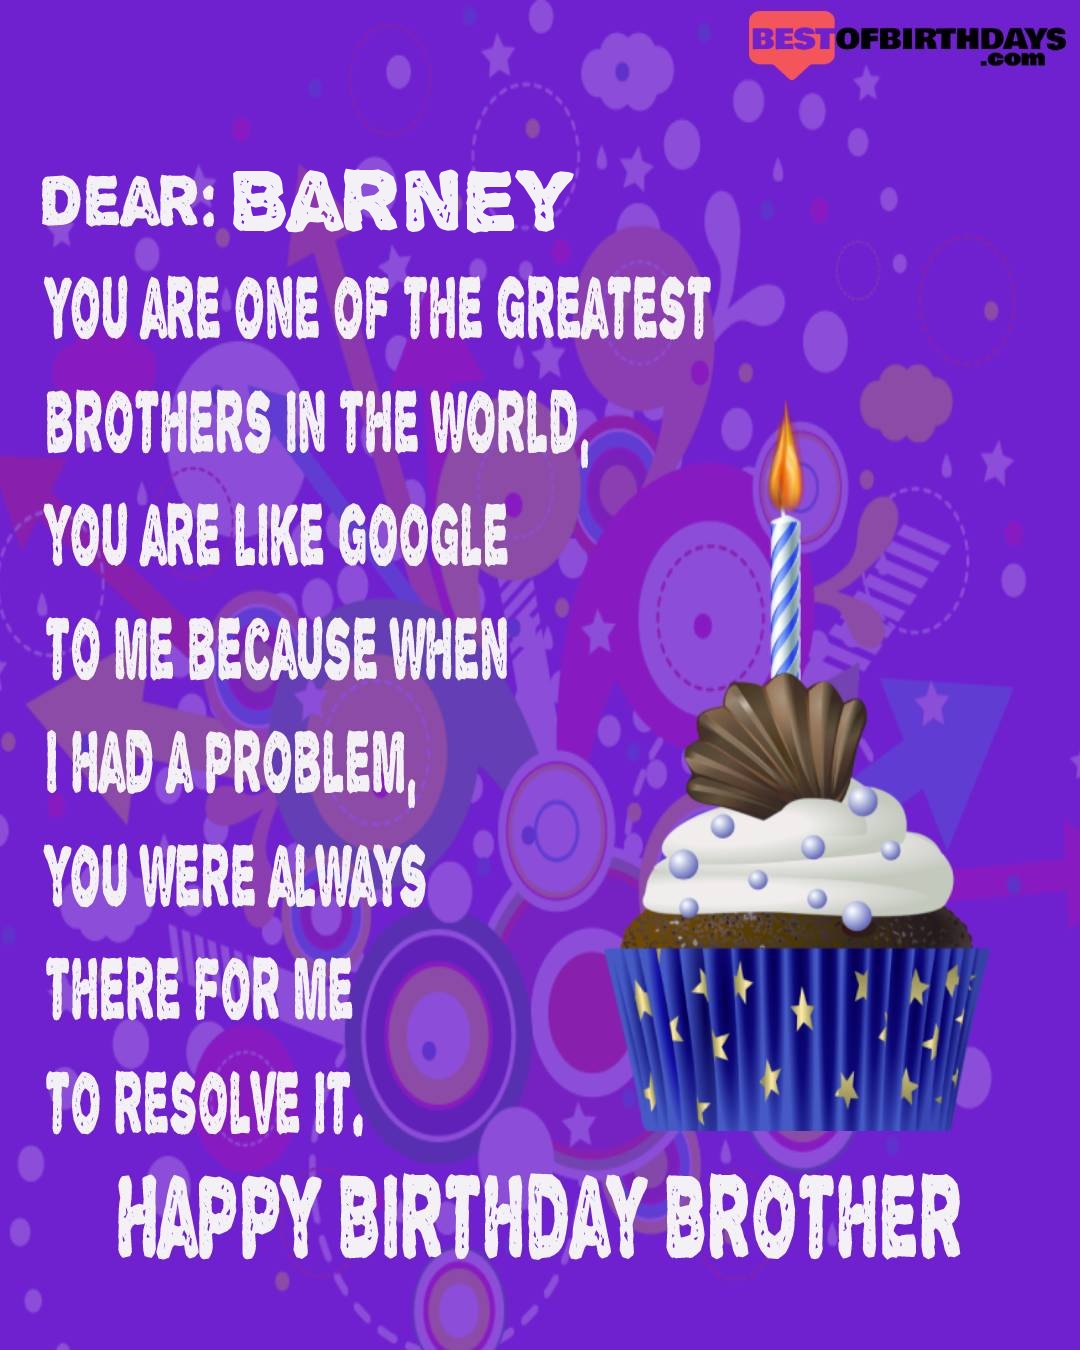 Happy birthday barney bhai brother bro